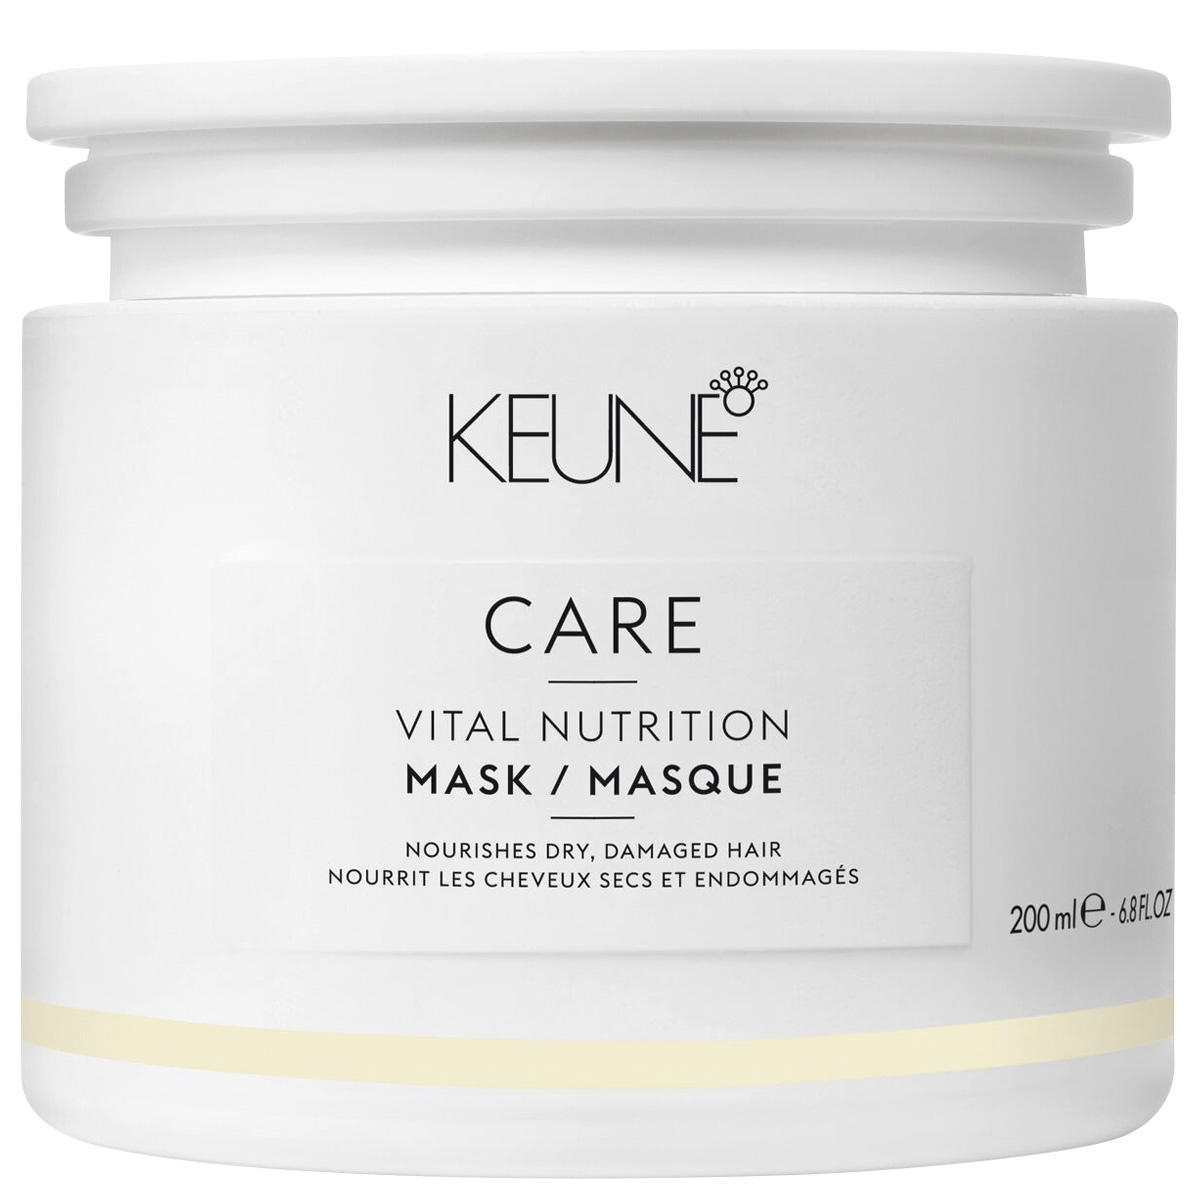 KEUNE CARE Vital Nutrition Mask 200 ml - 1